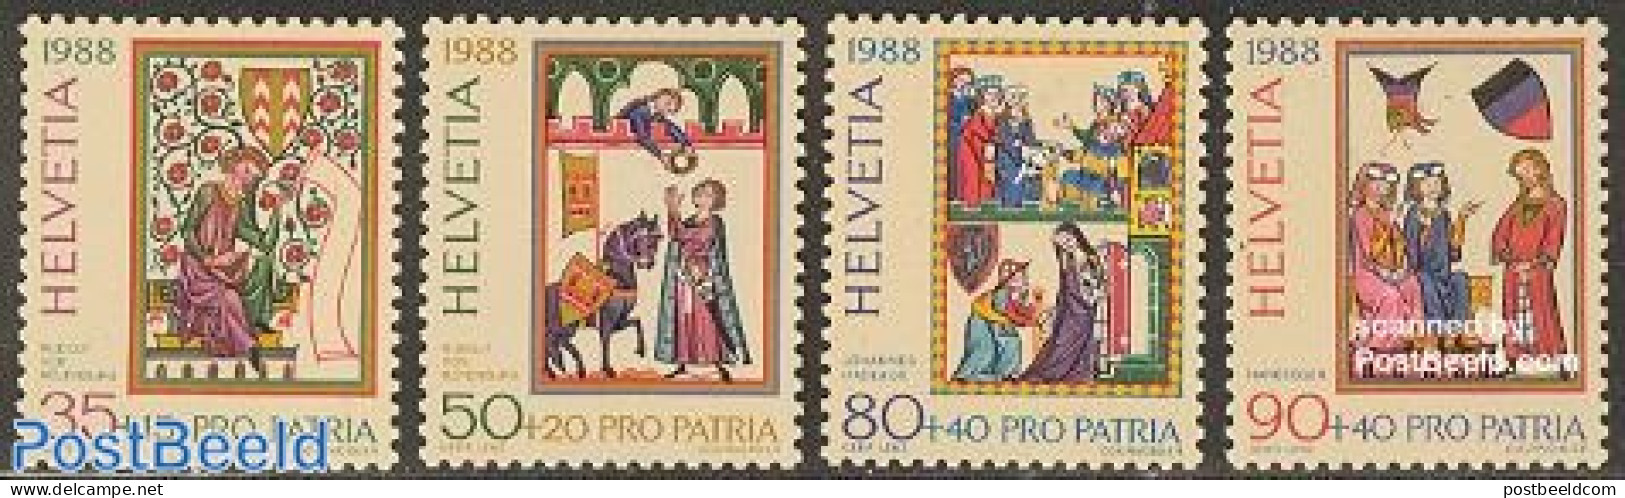 Switzerland 1988 Pro Patria 4v, Mint NH, Nature - Performance Art - Horses - Music - Art - Books - Unused Stamps